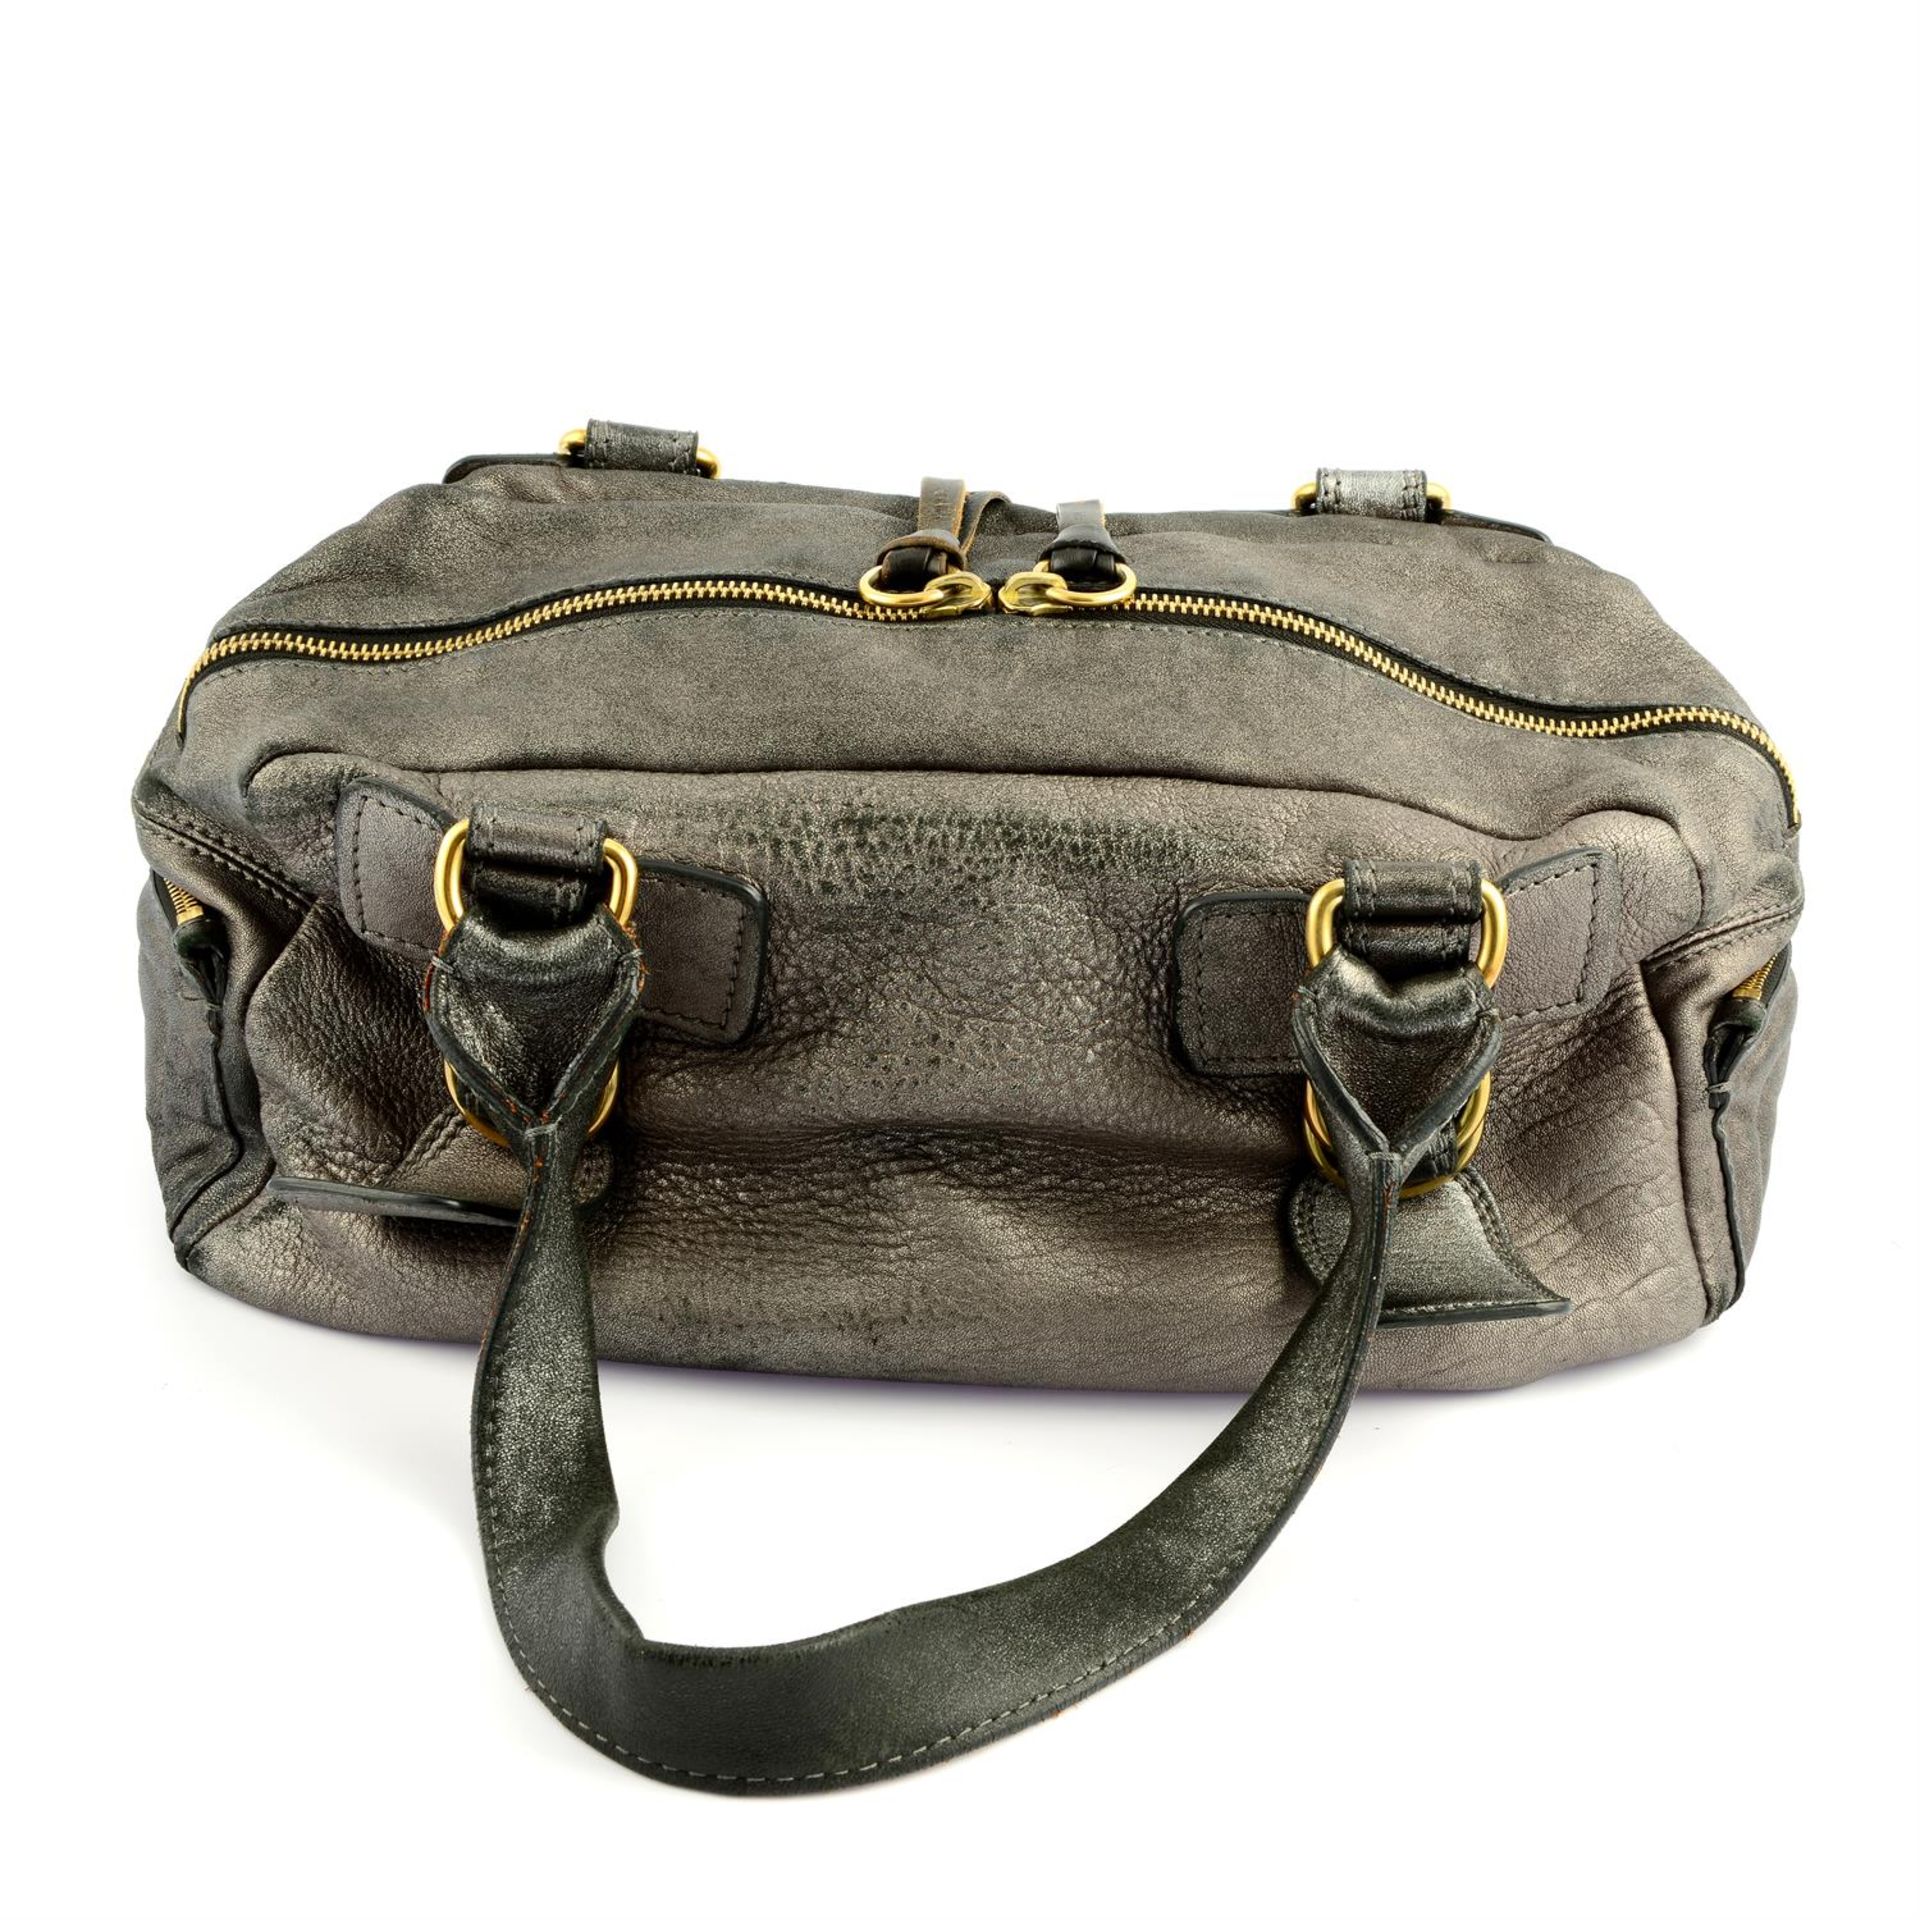 CHLOÉ- a gunmetal leather Bay handbag. - Image 2 of 5